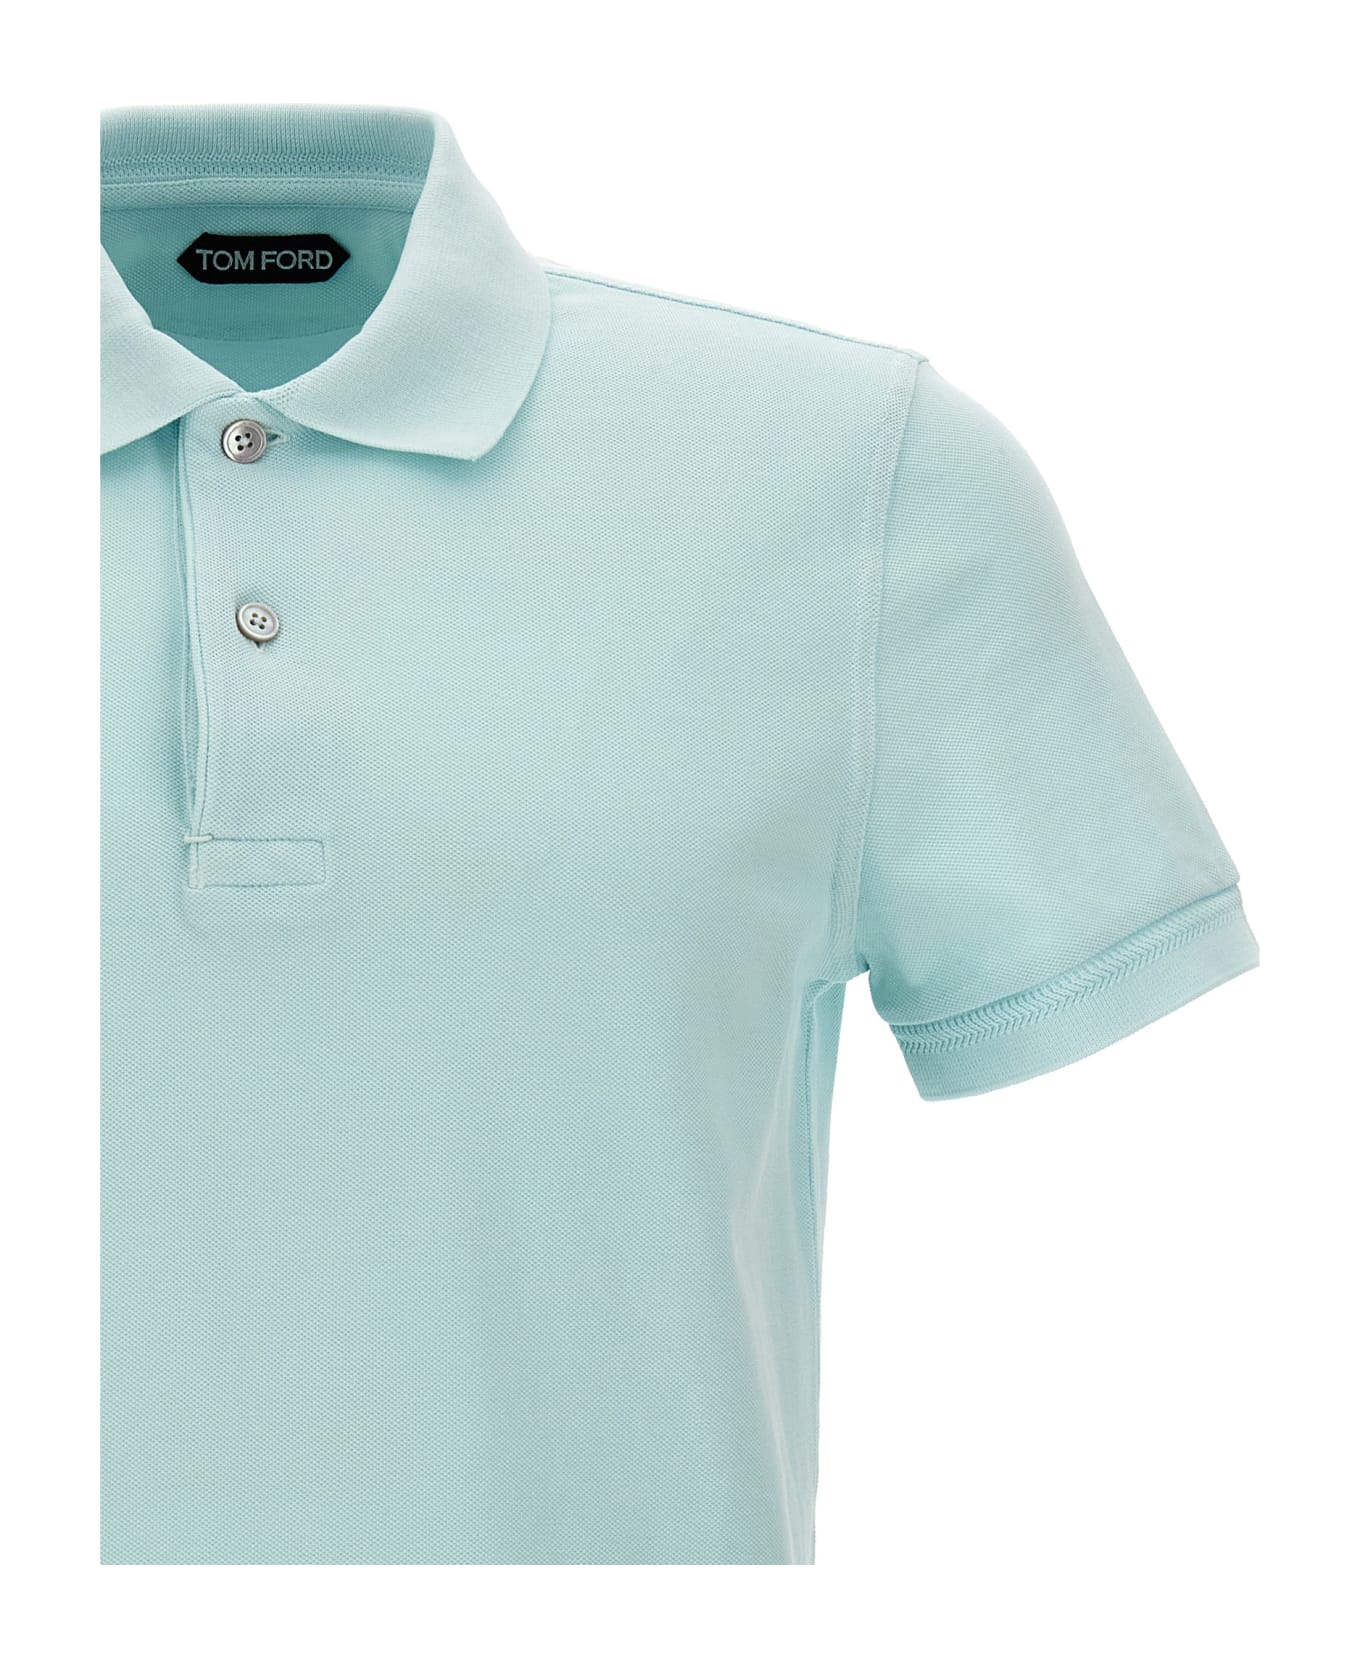 Tom Ford 'tennis Piquet' Polo Shirt - Light Blue